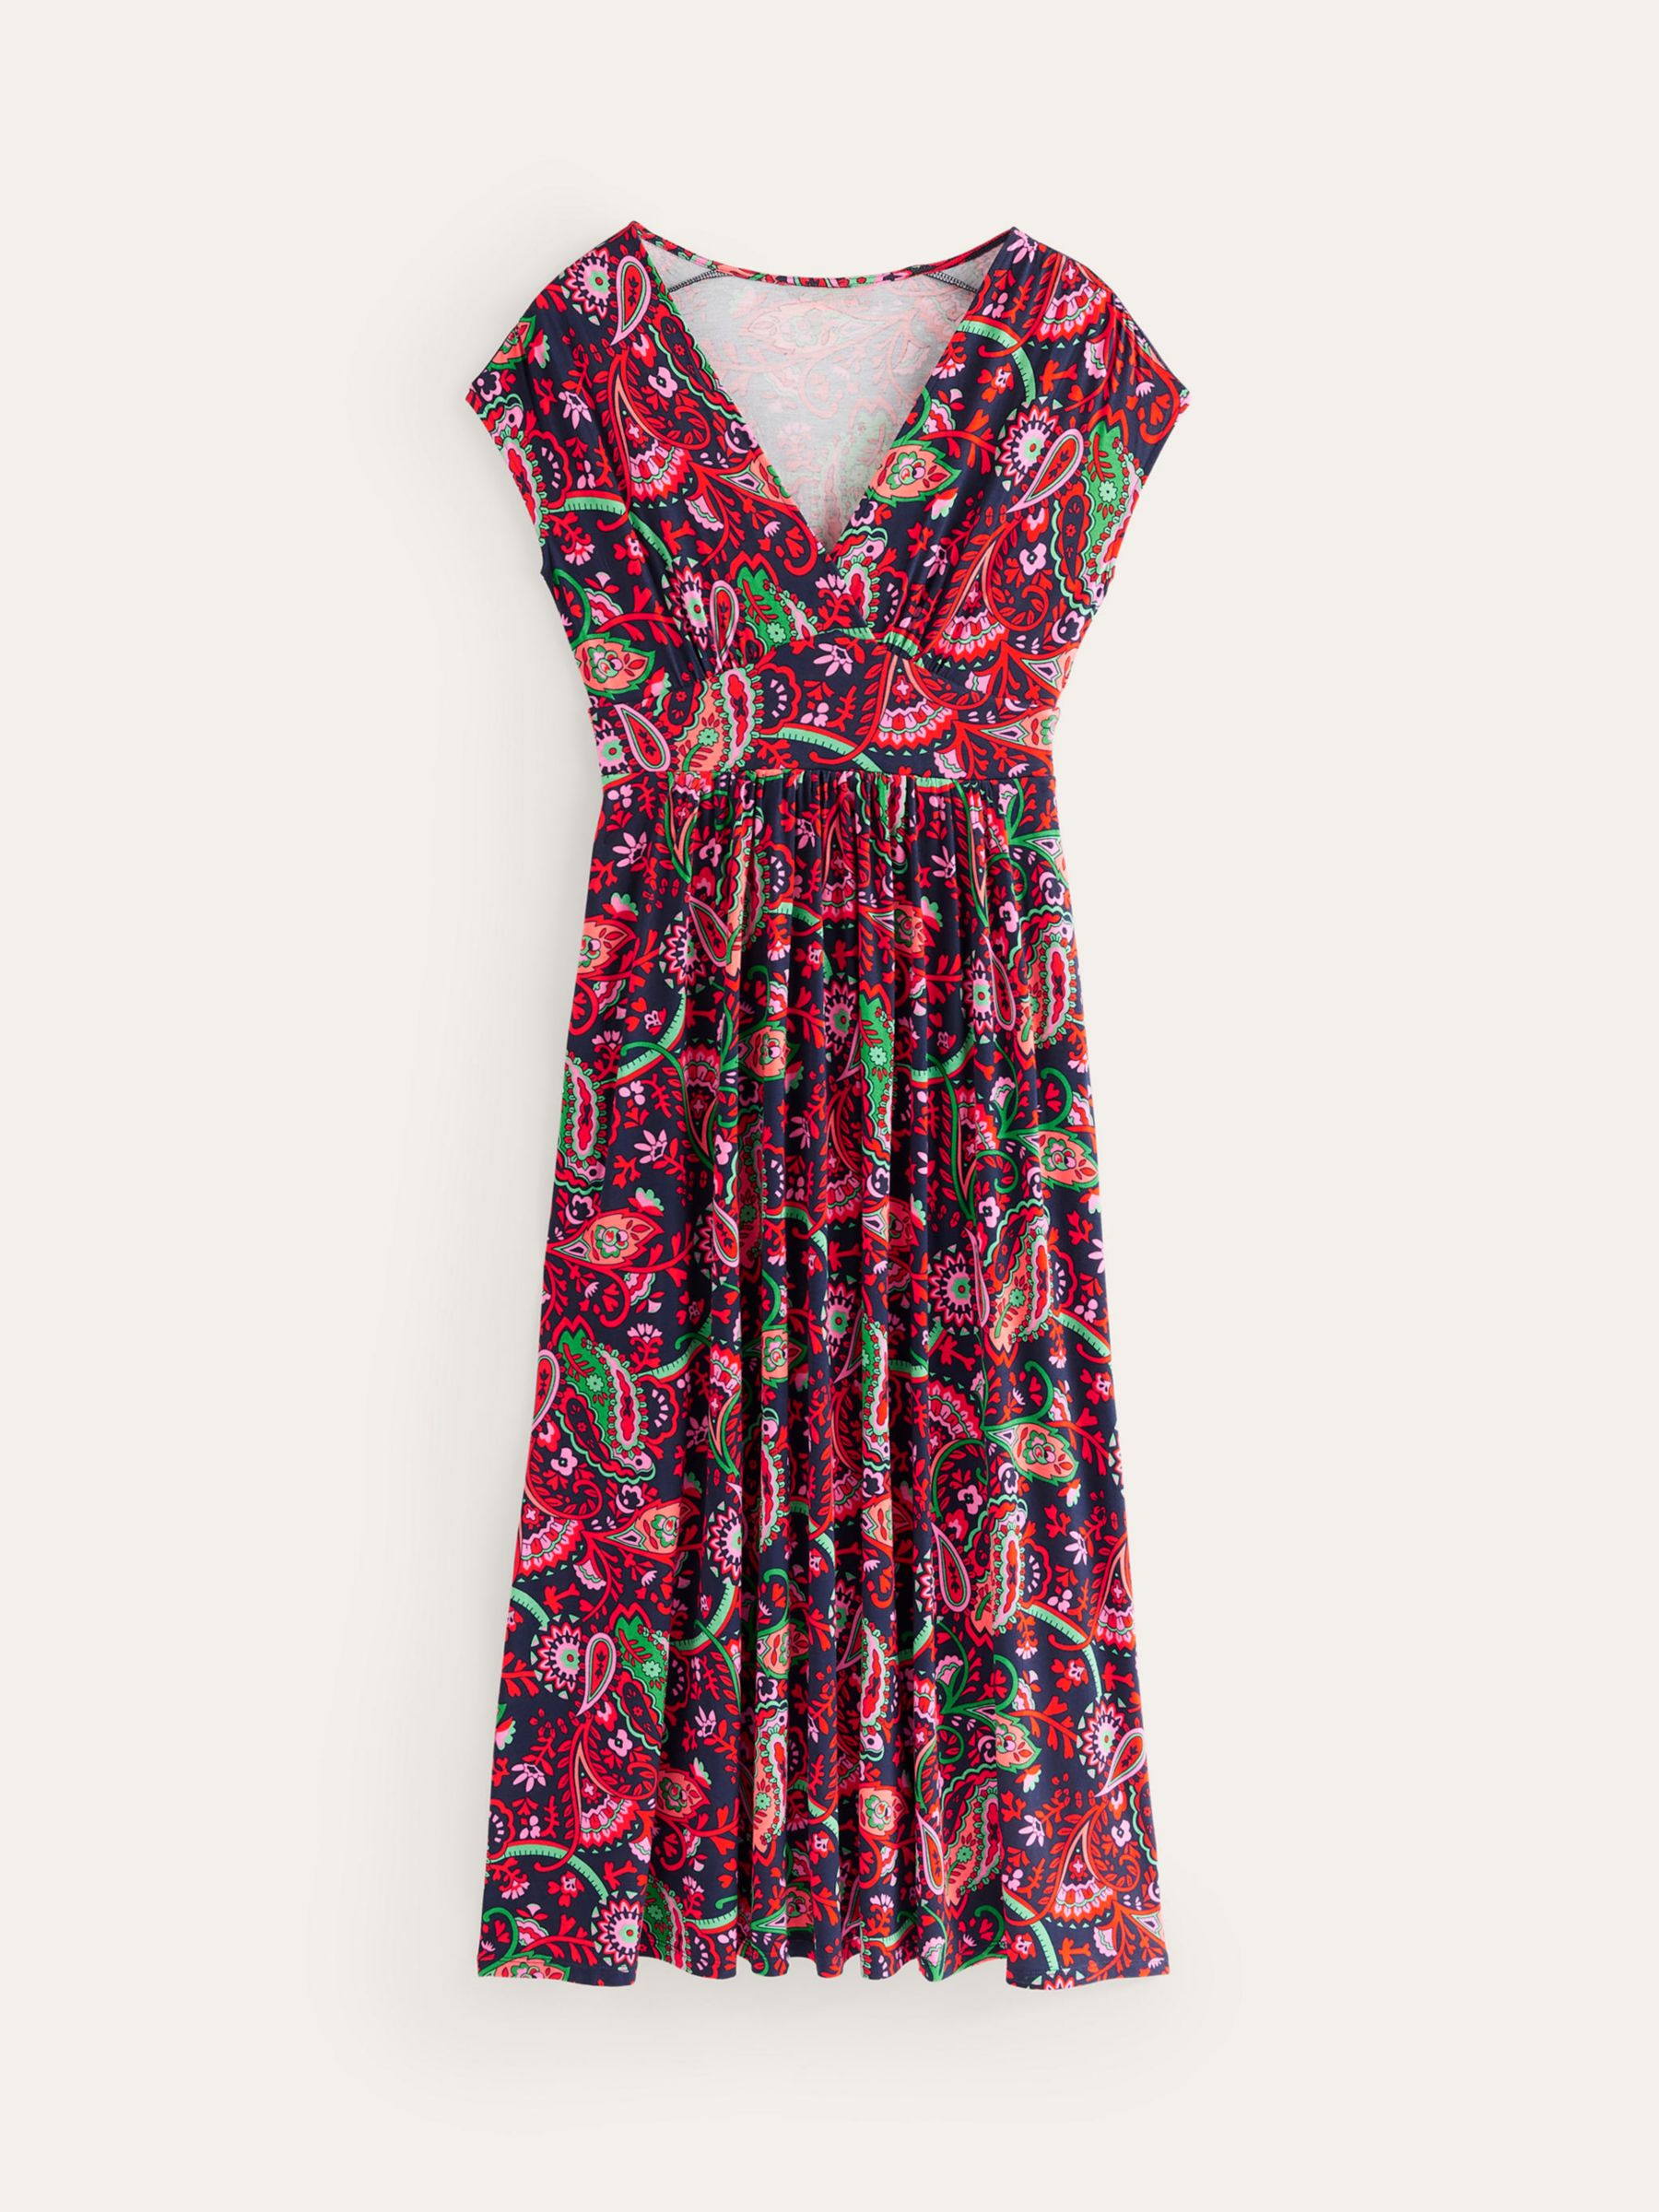 Boden Vanessa Paisley Print Midi Wrap Jersey Dress, Navy/Multi, 18